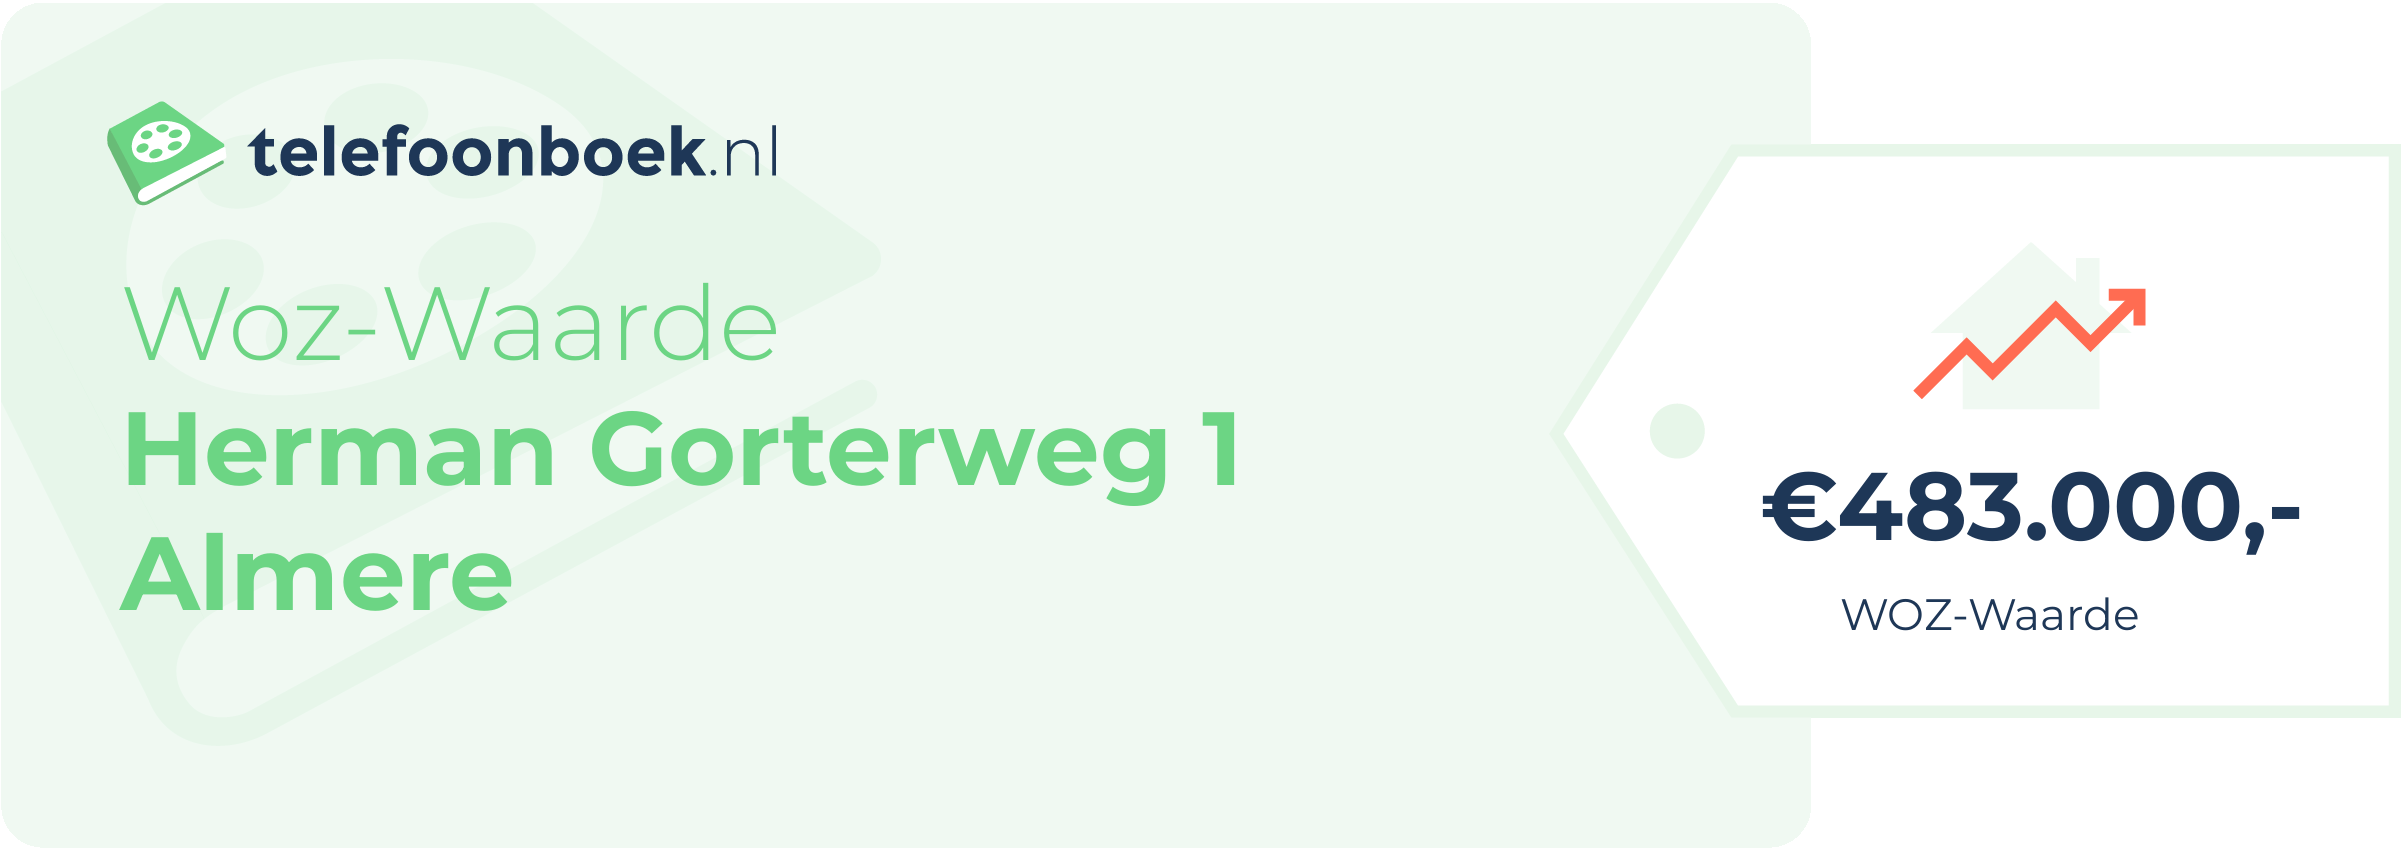 WOZ-waarde Herman Gorterweg 1 Almere